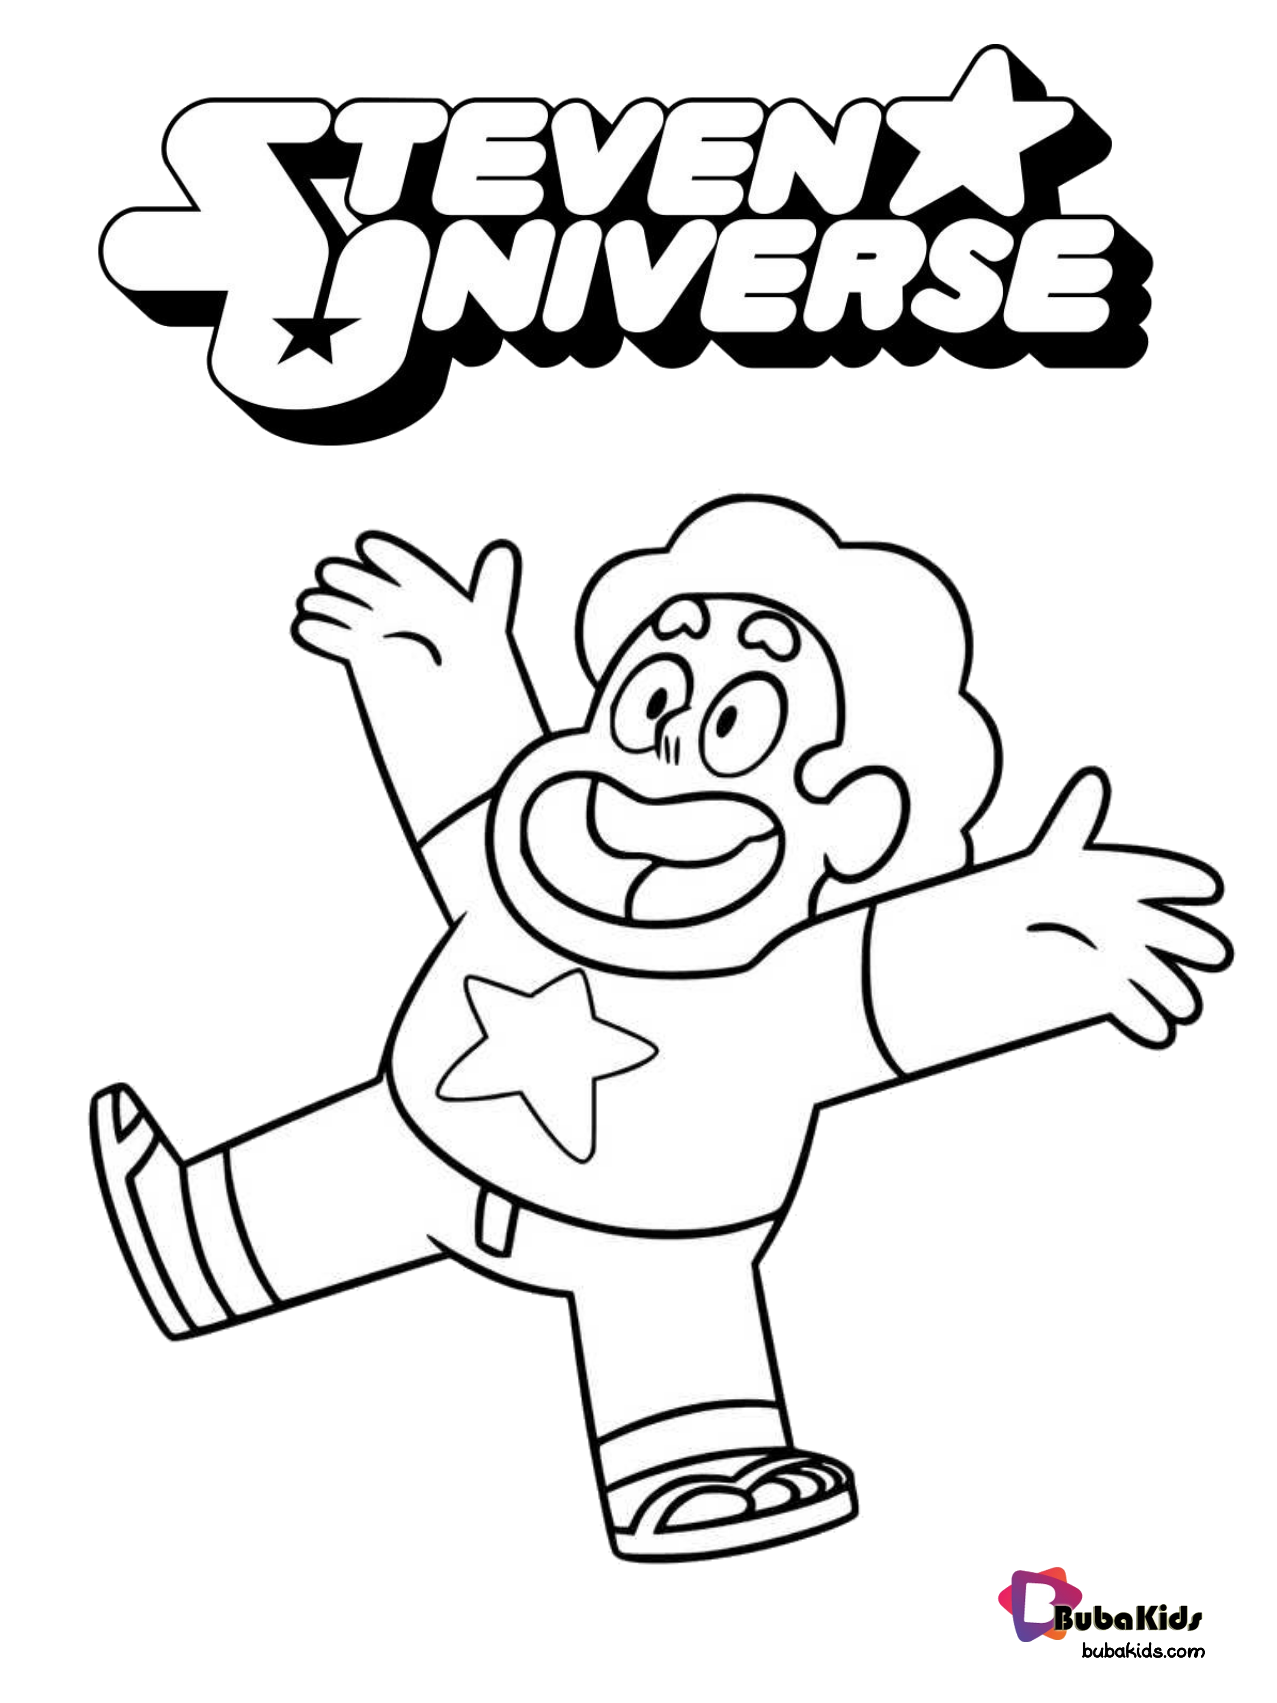 Steven Universe coloring page. Wallpaper